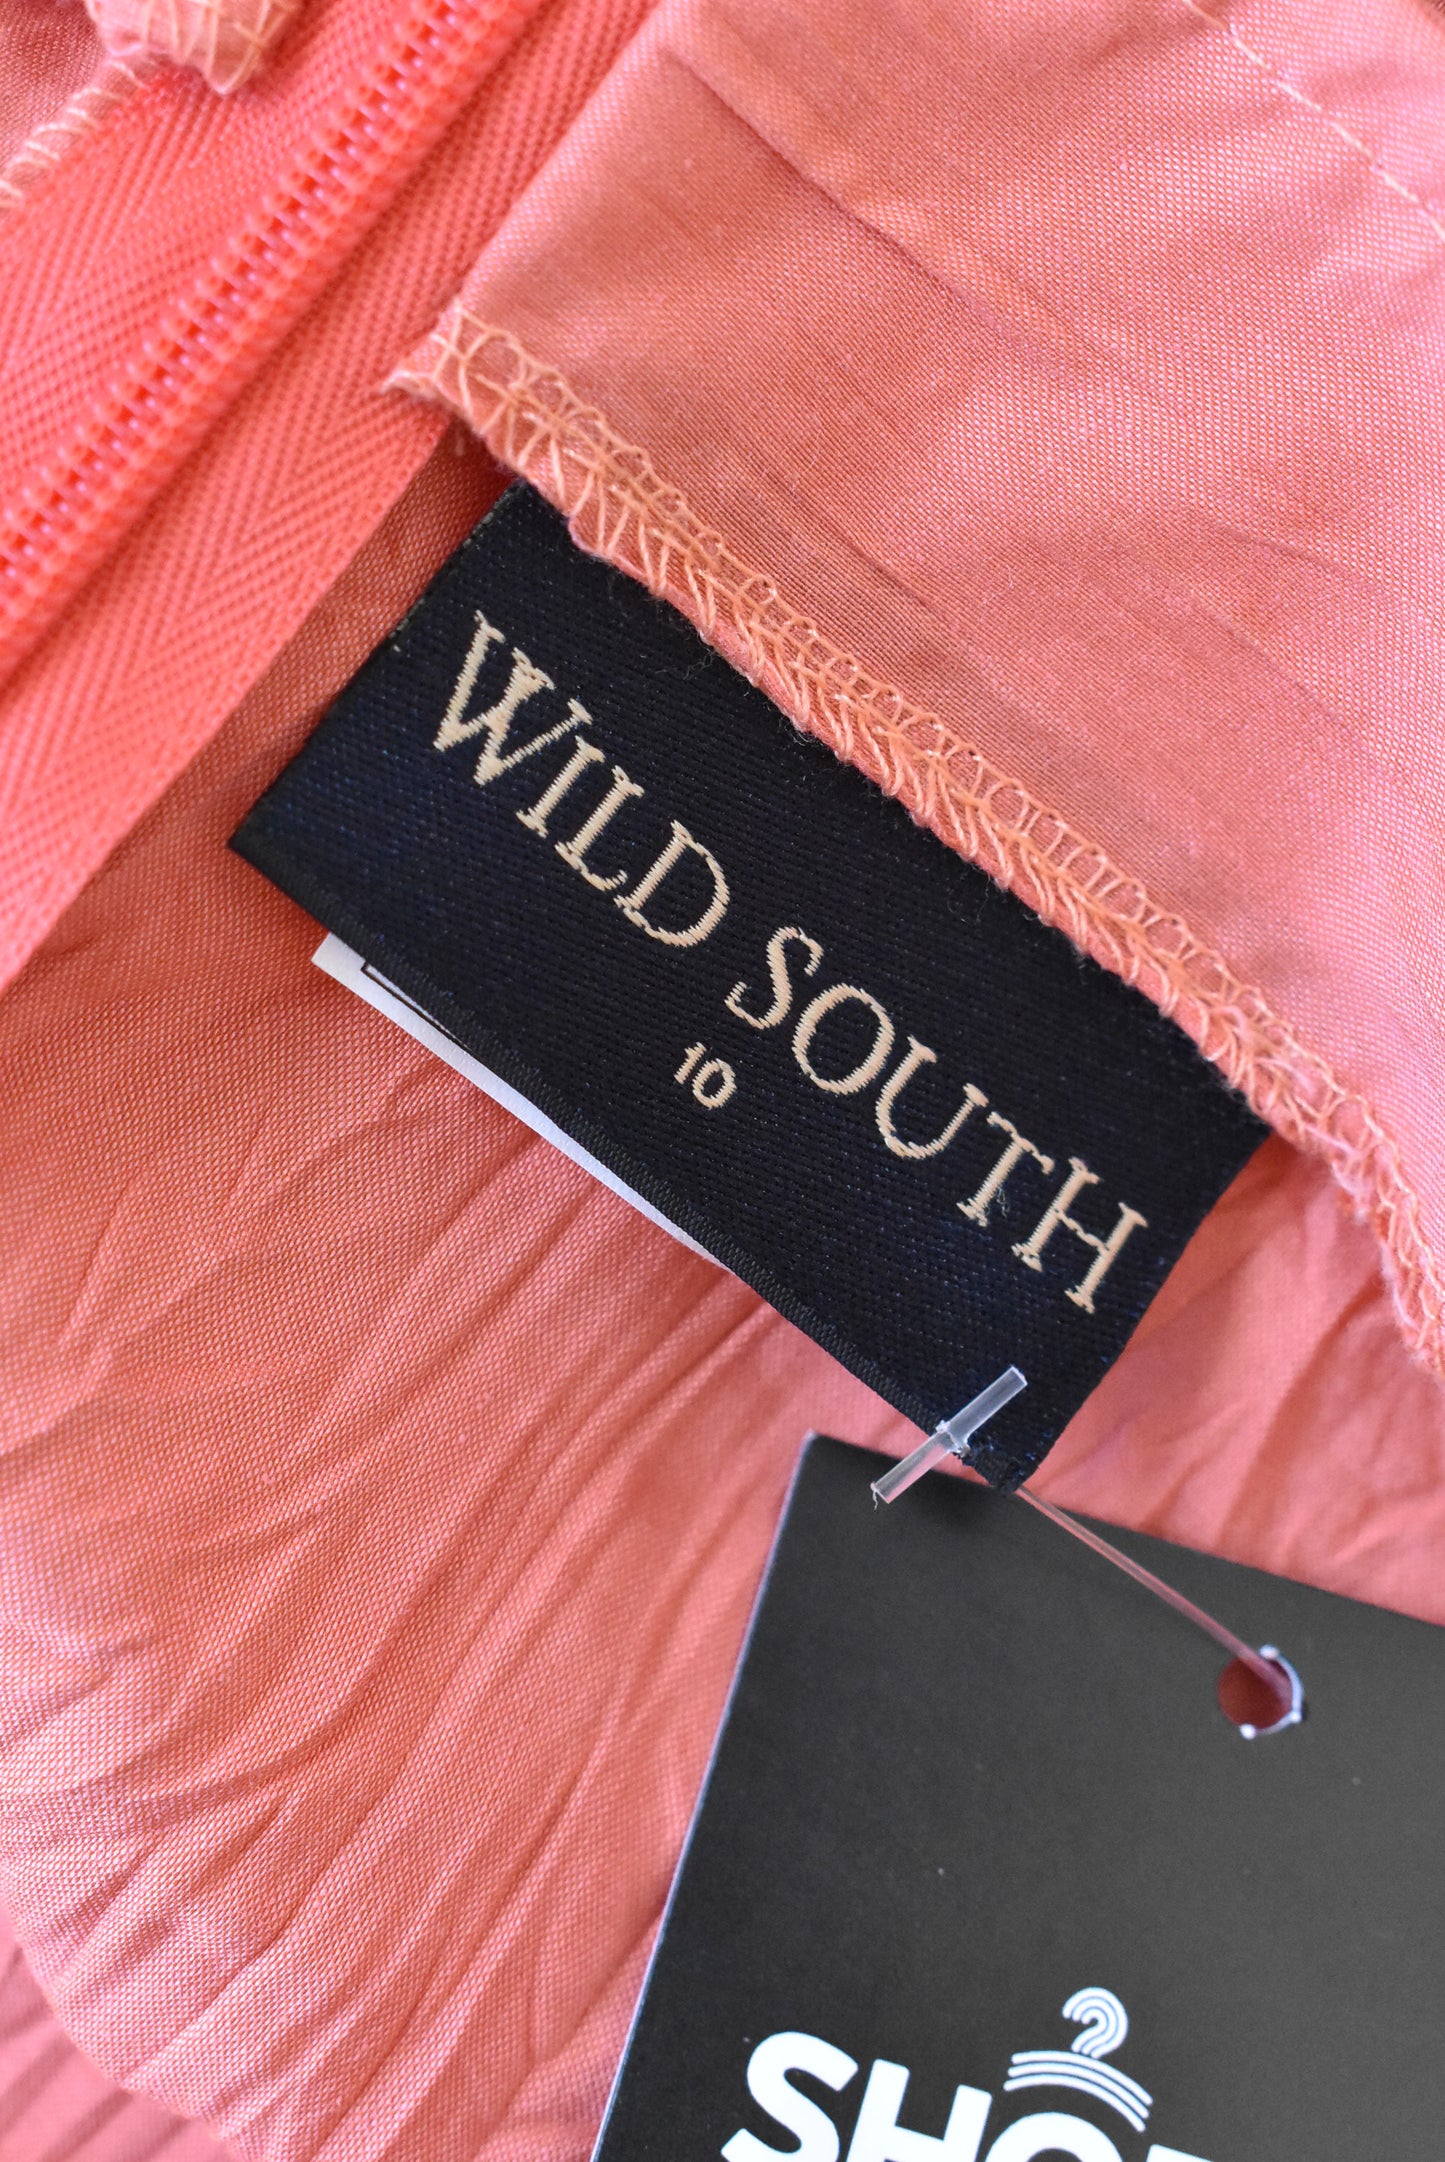 Wild South peach midi skirt, size 10